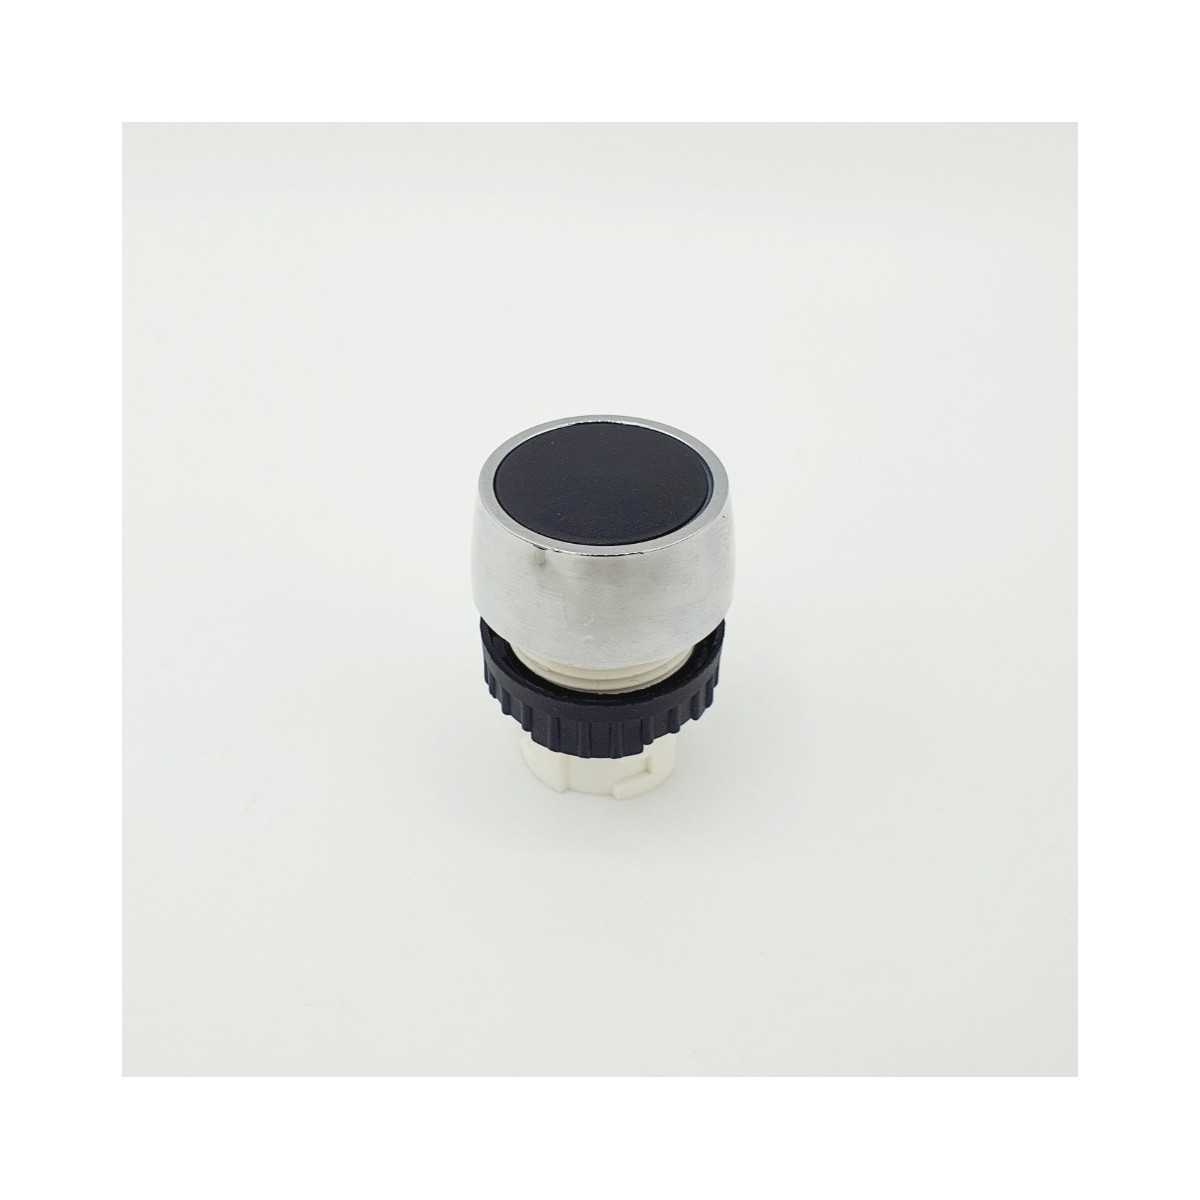 Push button black Ø22.5mm | Beta Online Shop